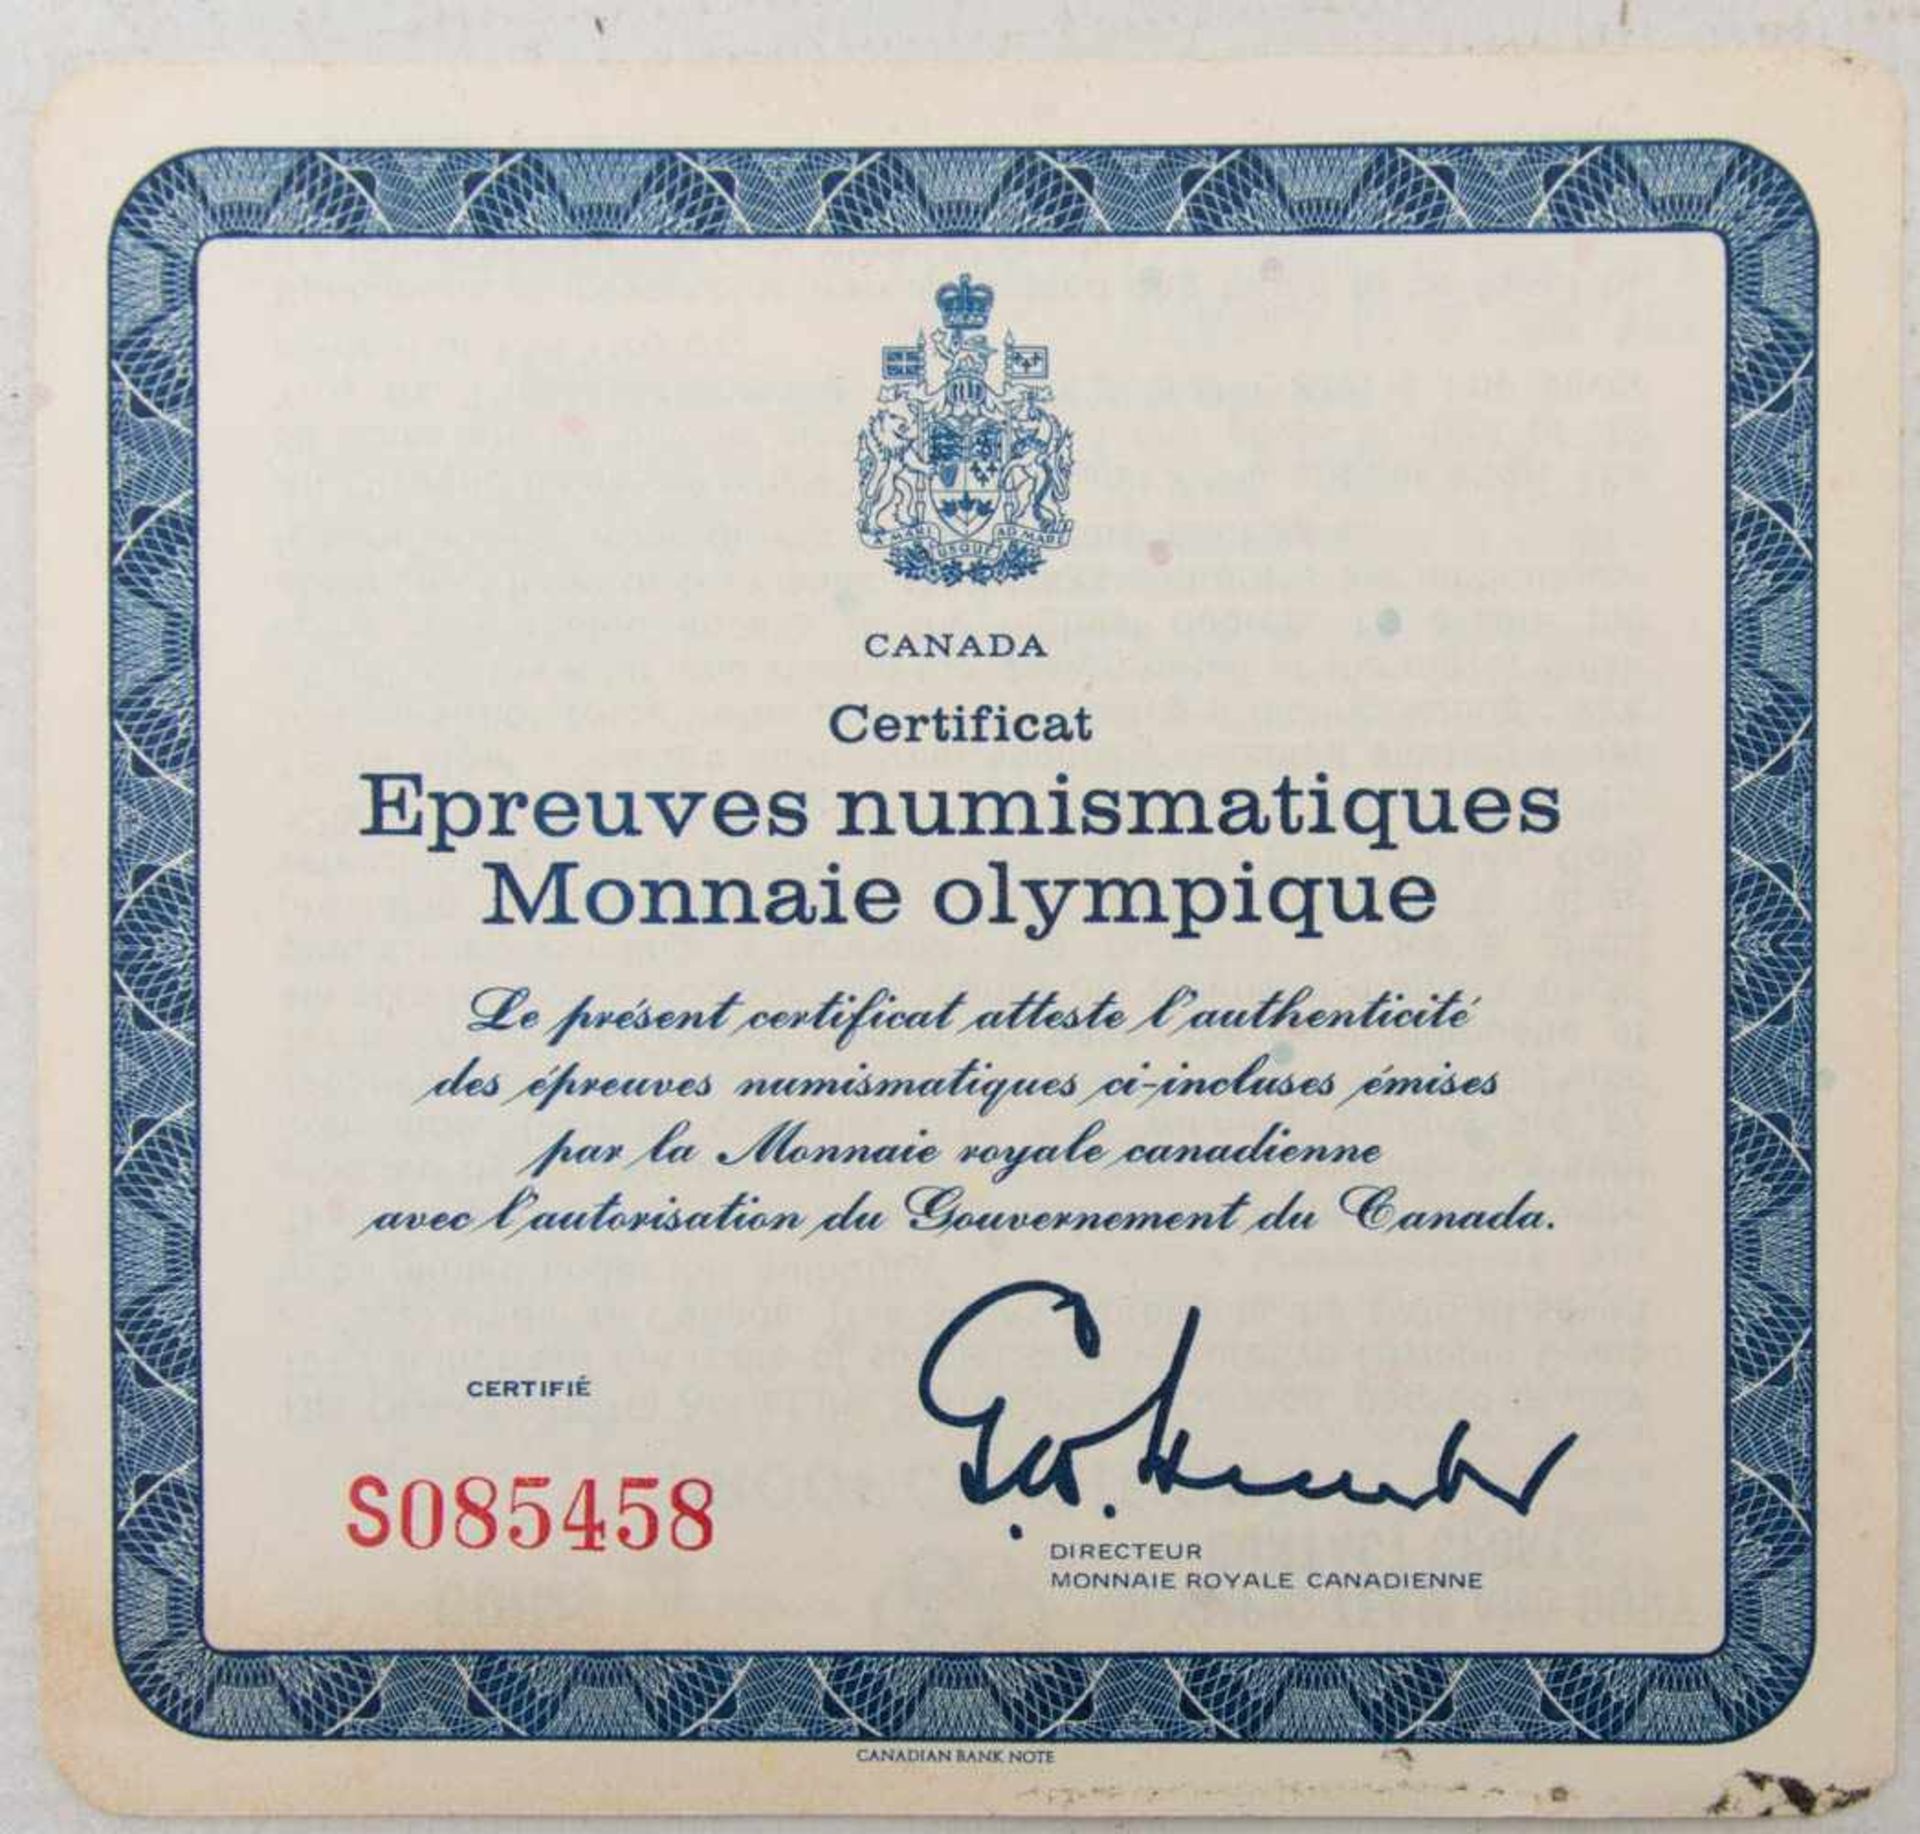 OLYMPIA,1976 Montreal, Serie: Mannschaftssport, Kanada, 20. Jh.In Originalbox mit Kaufpapieren. 2 - Image 5 of 15